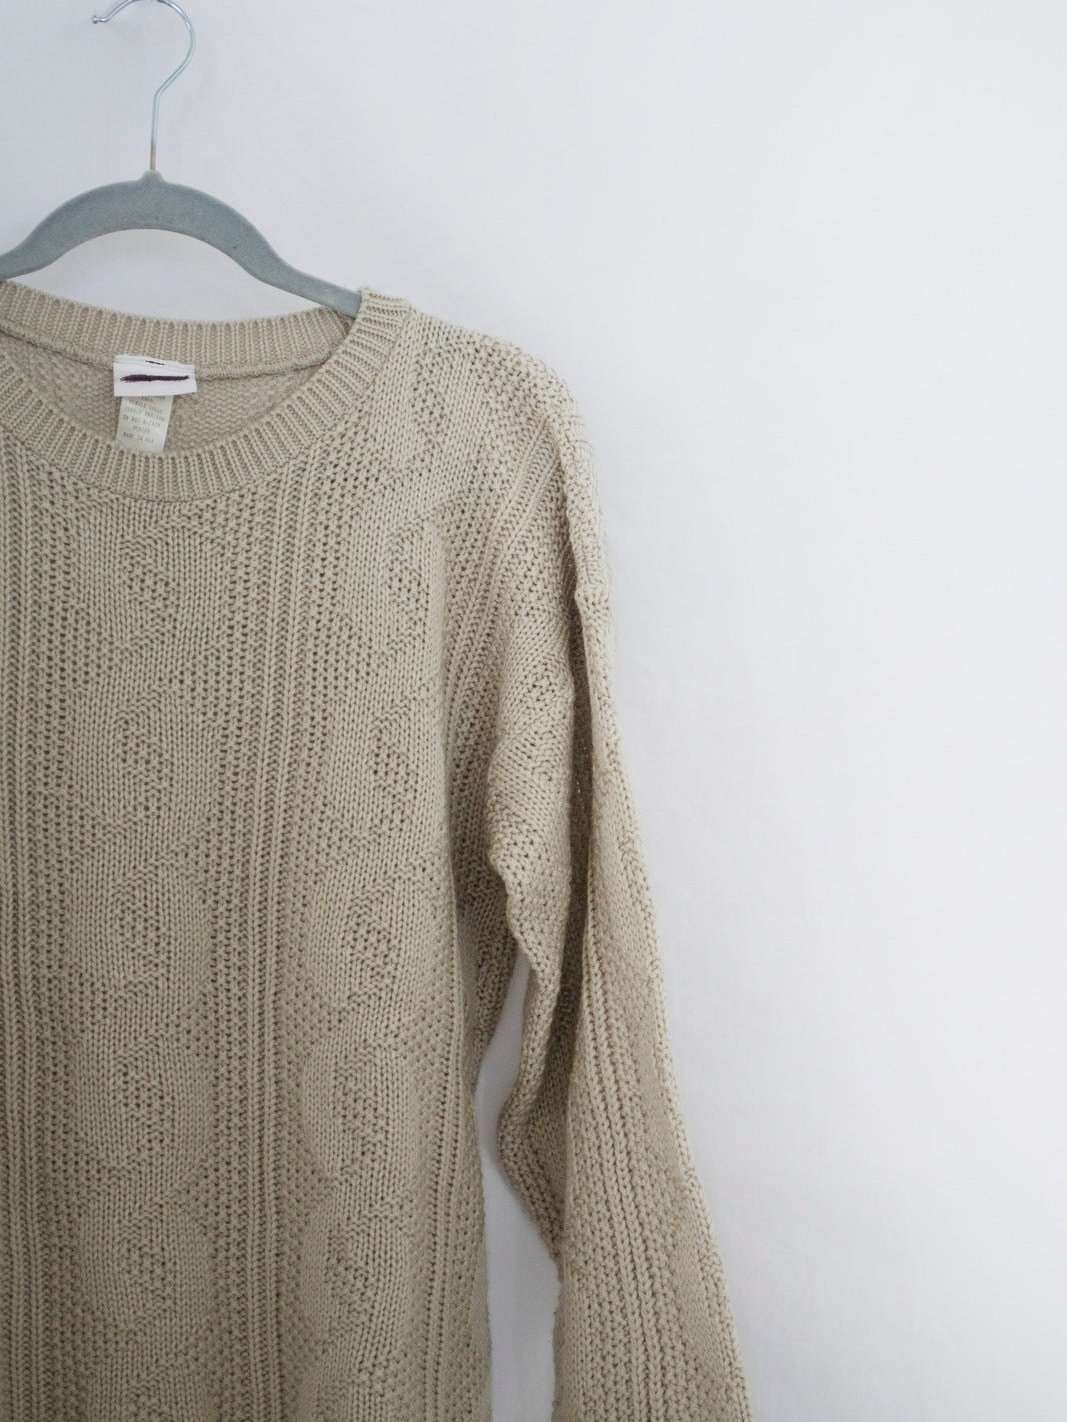 Bobbie Brooks Sweater - Medium –ThriftedEquestrian